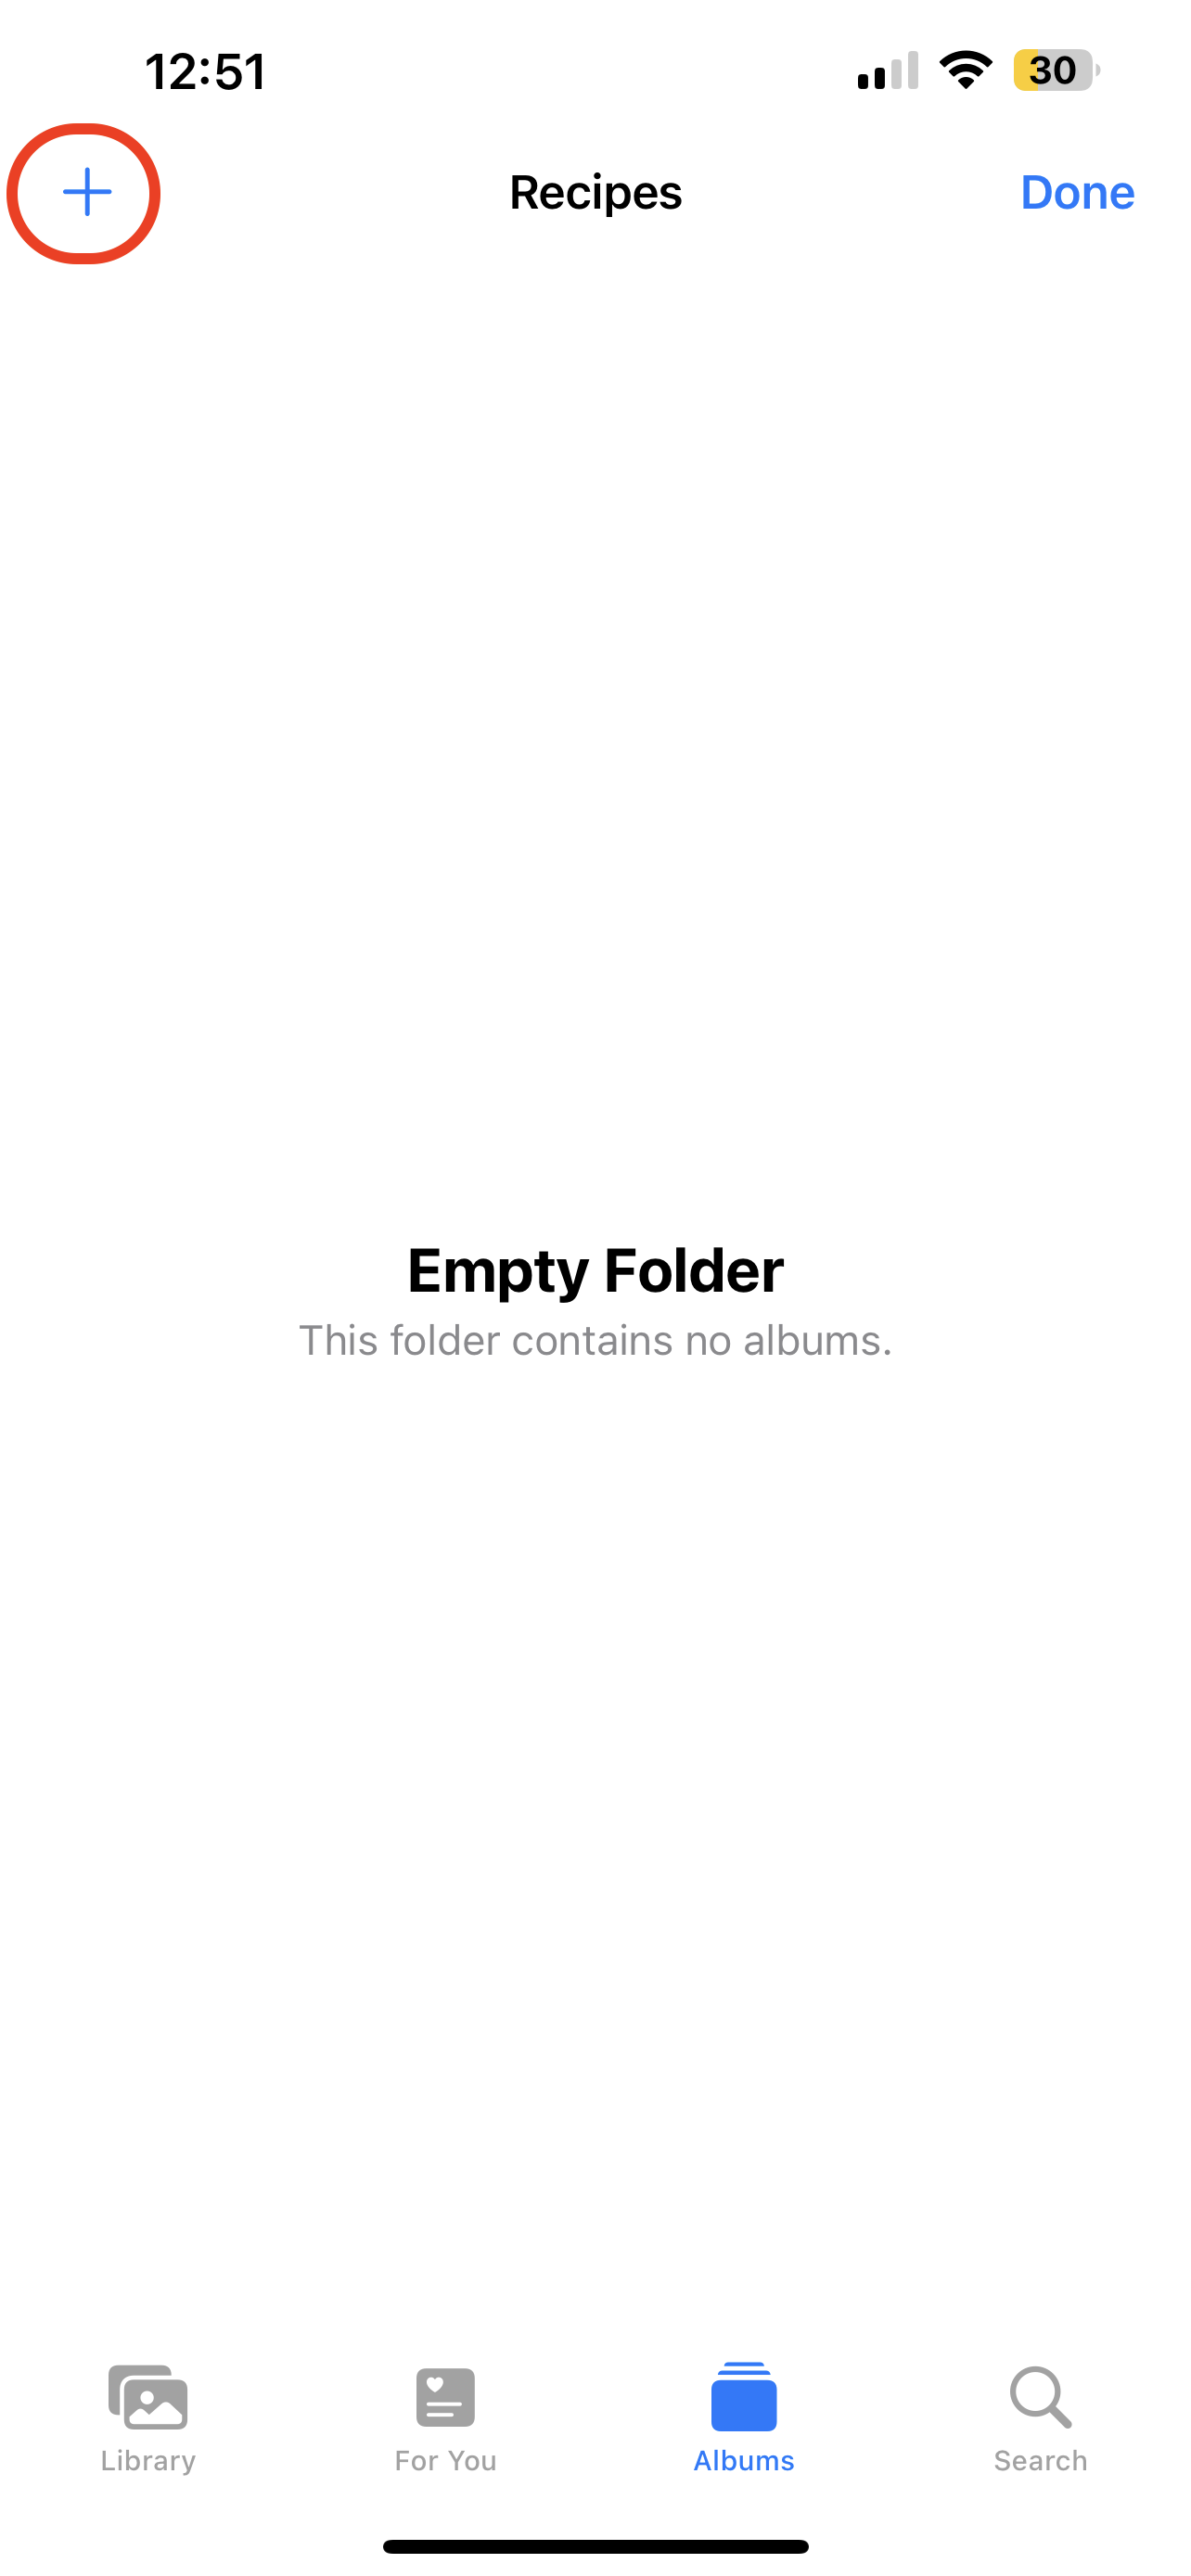 add new album inside a folder photos app